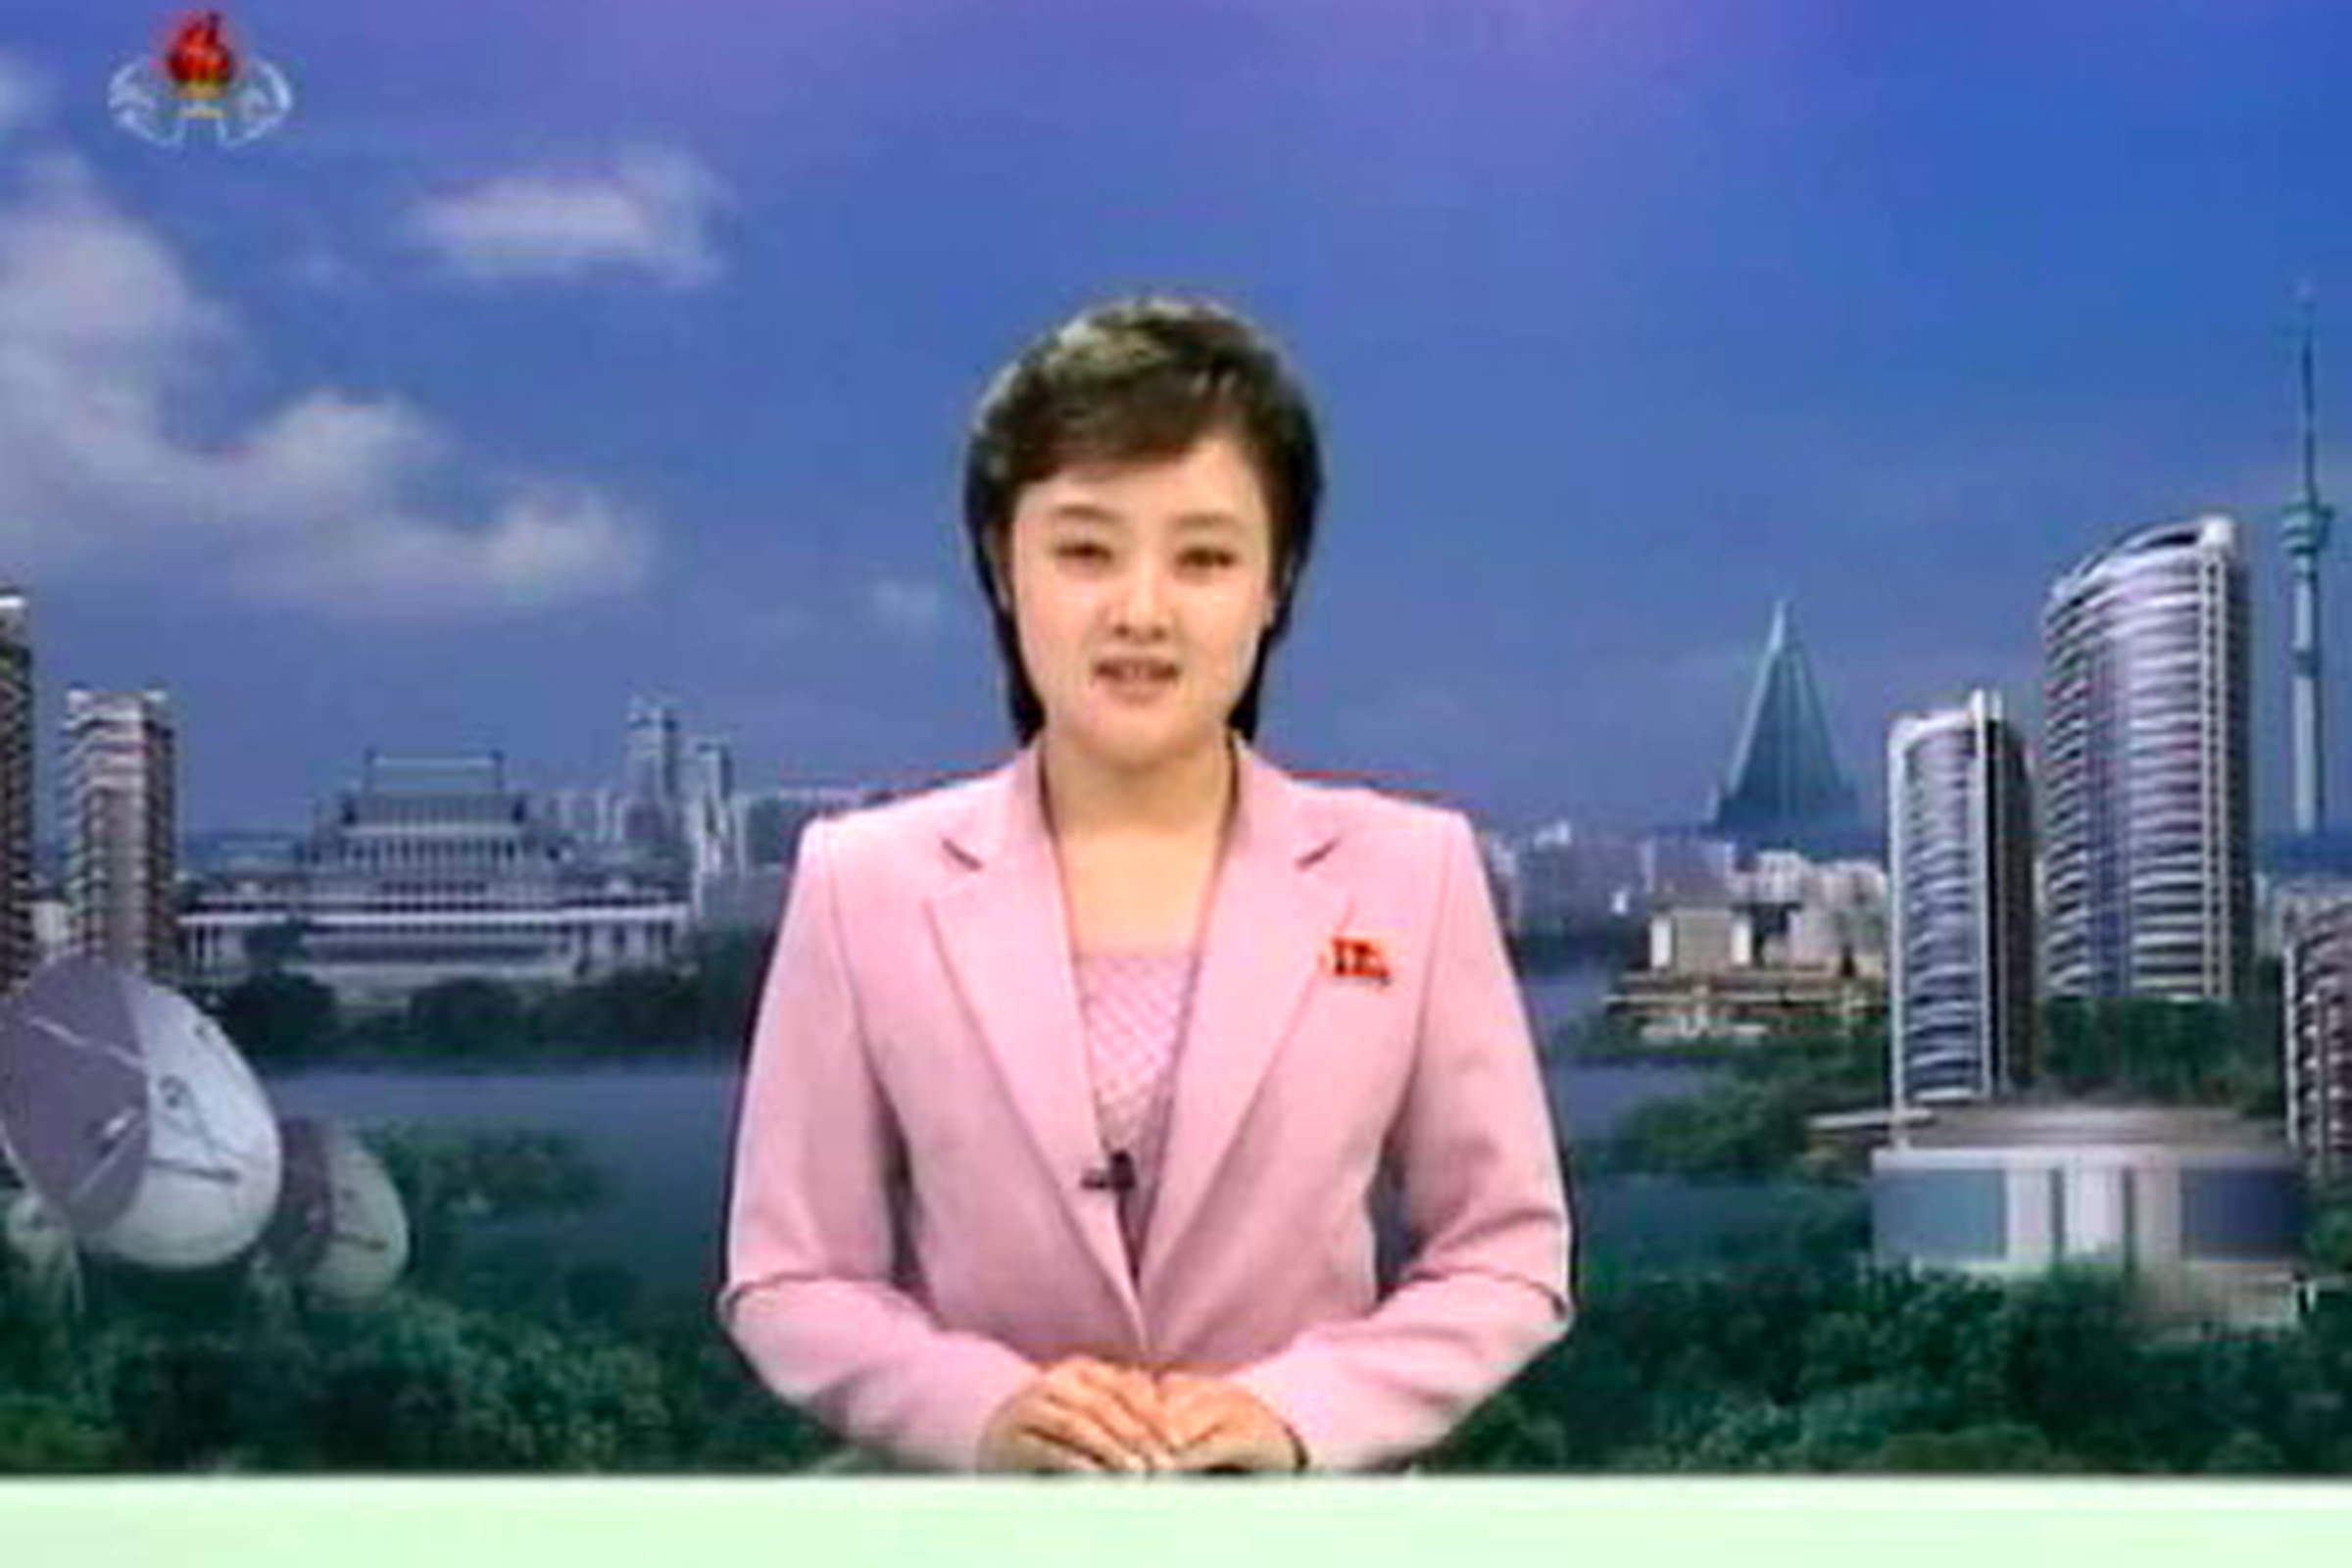 North Korea telecast